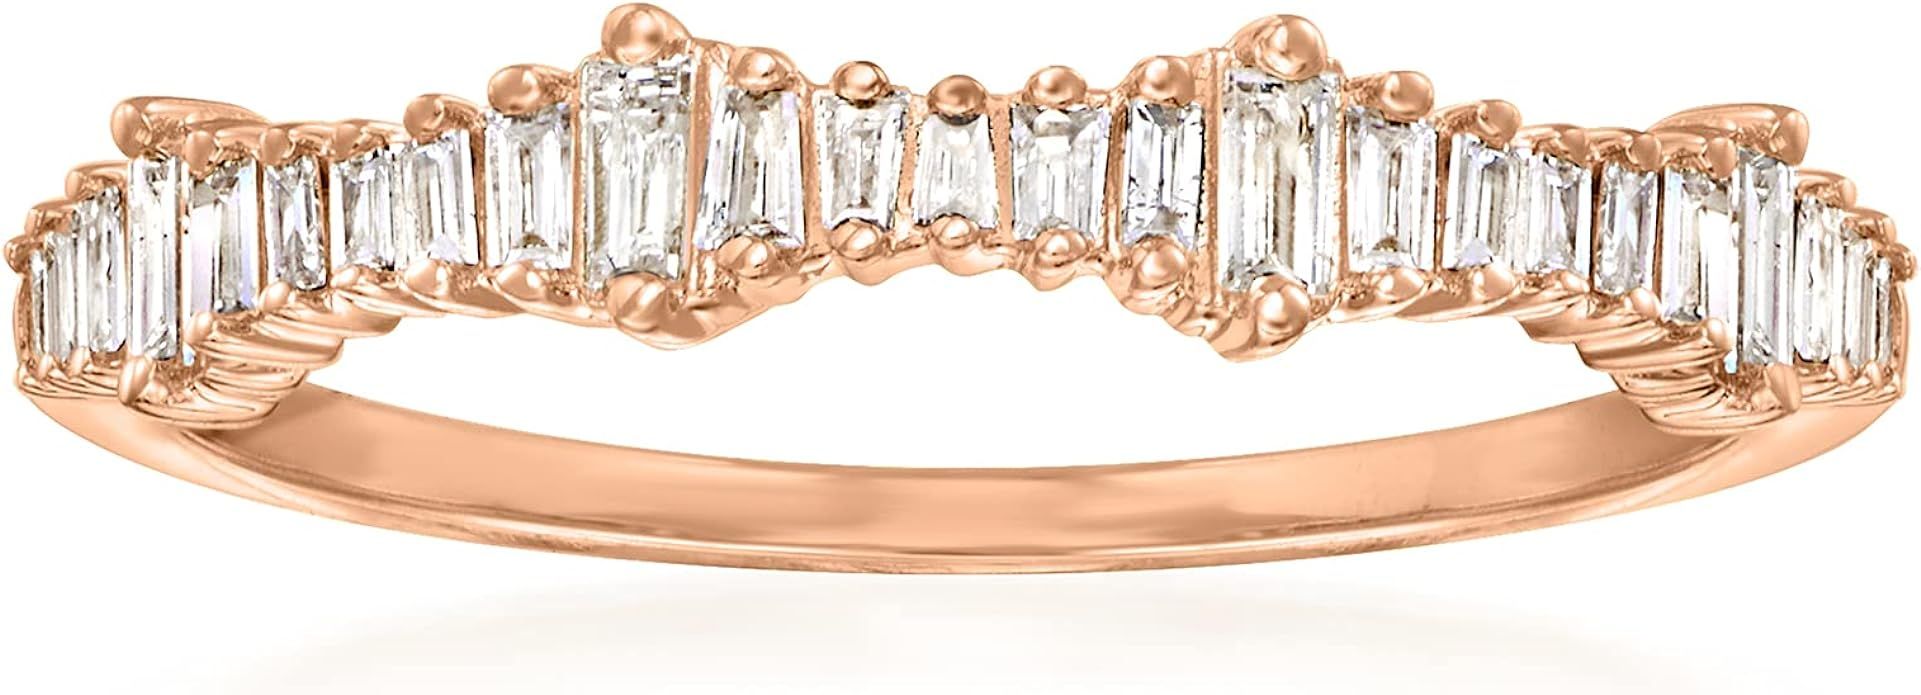 Ross-Simons .20 ct. t.w. Baguette Diamond Ring in 14kt Gold | Amazon (US)